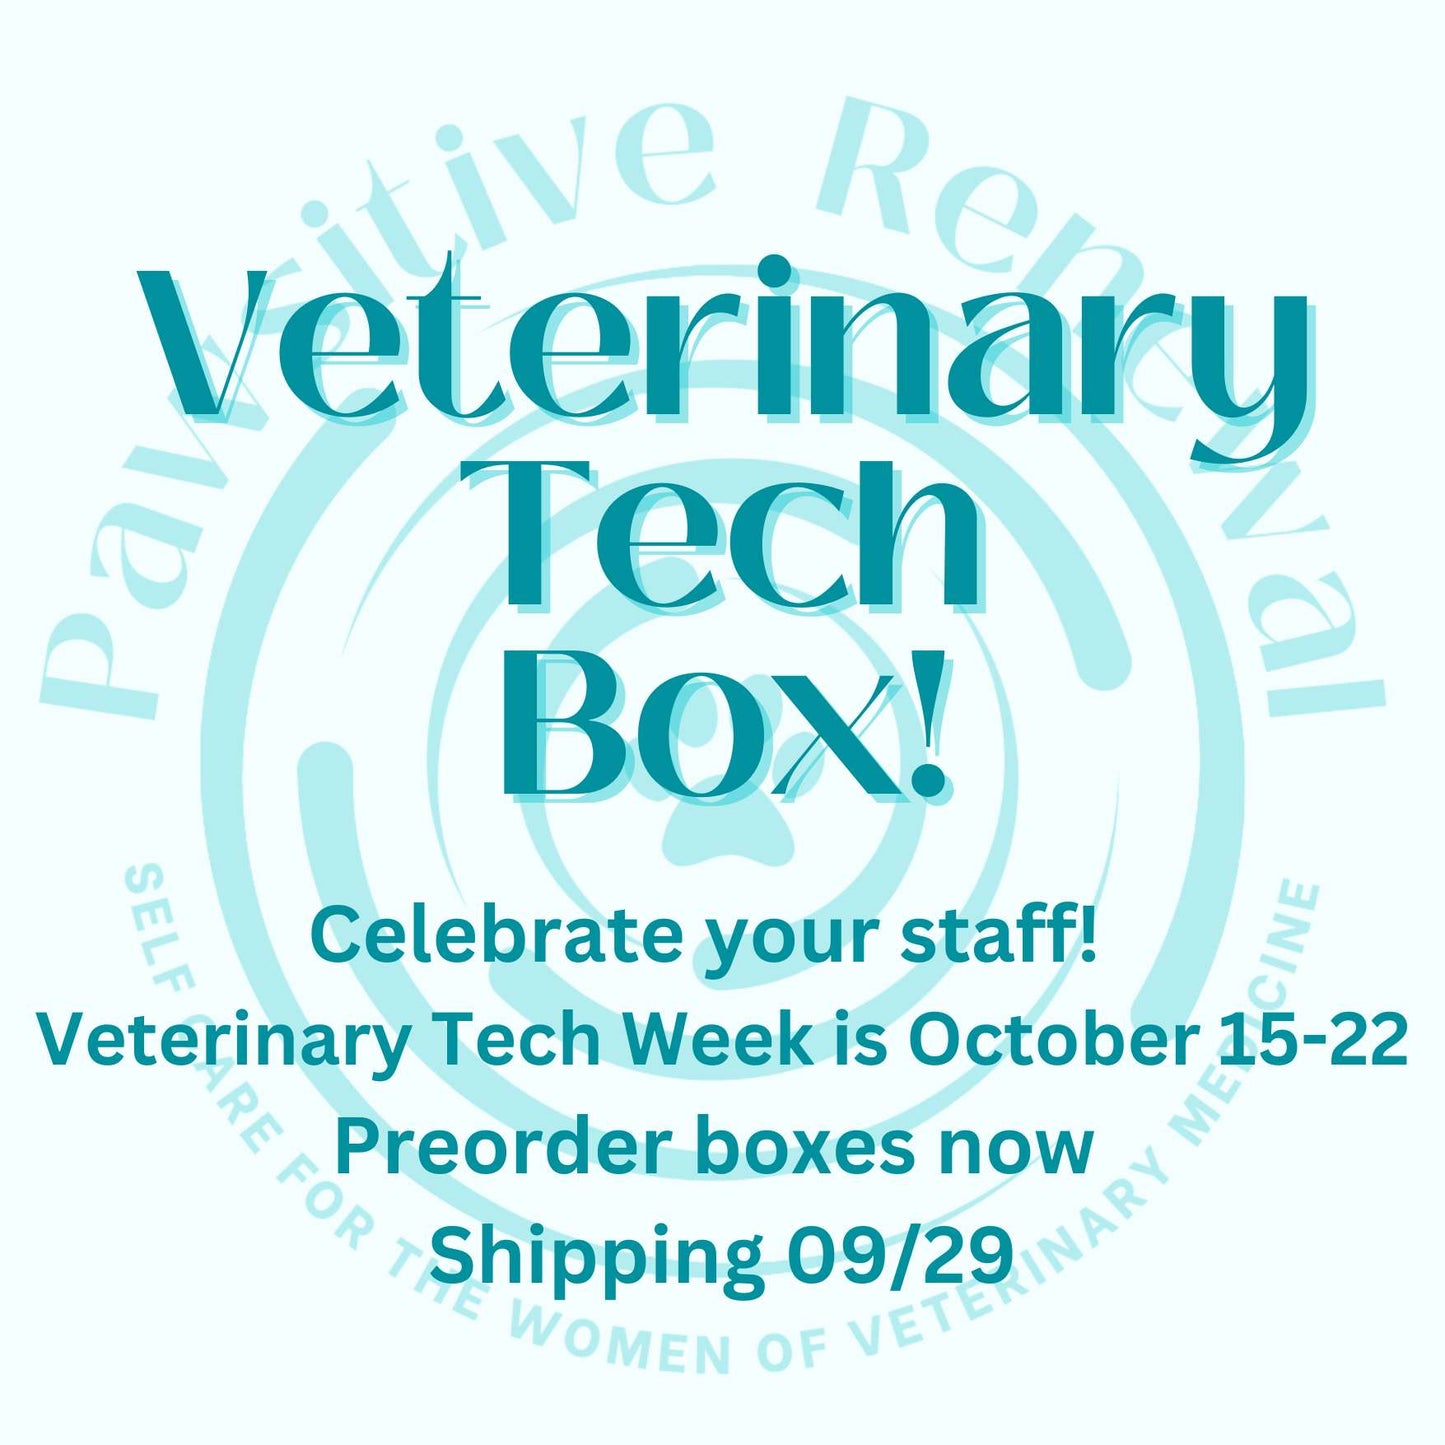 Veterinary Tech Pawsitive Renewal Box - T shirt size 4XL